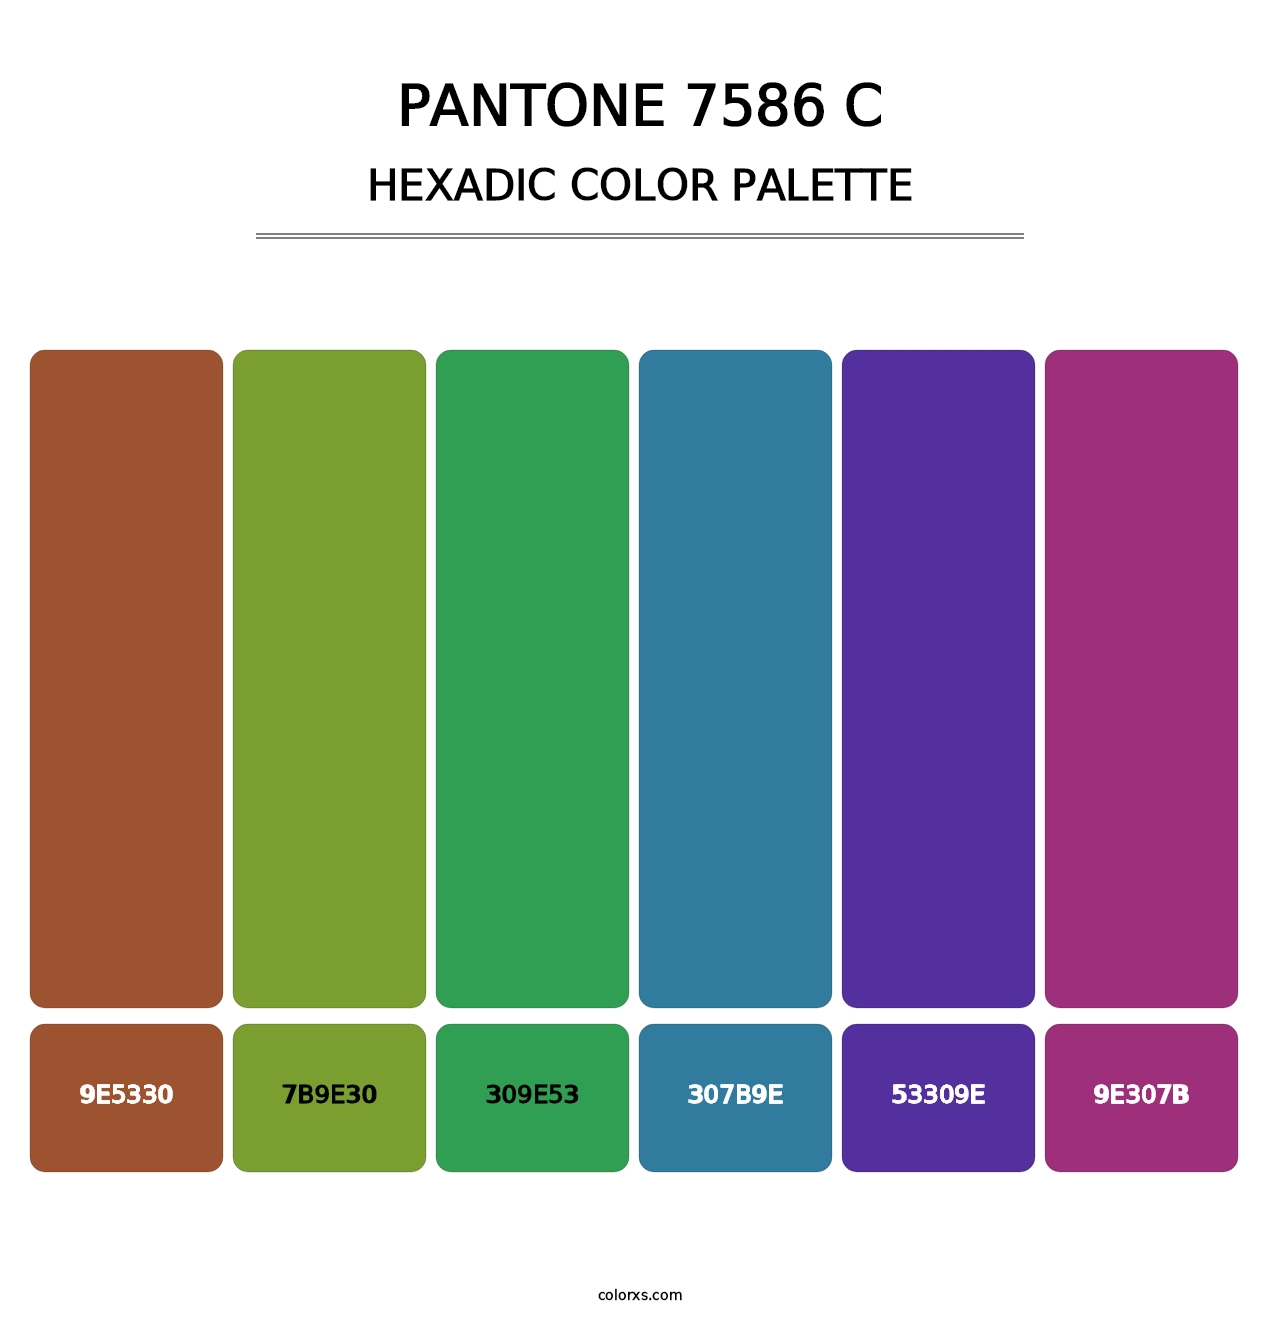 PANTONE 7586 C - Hexadic Color Palette